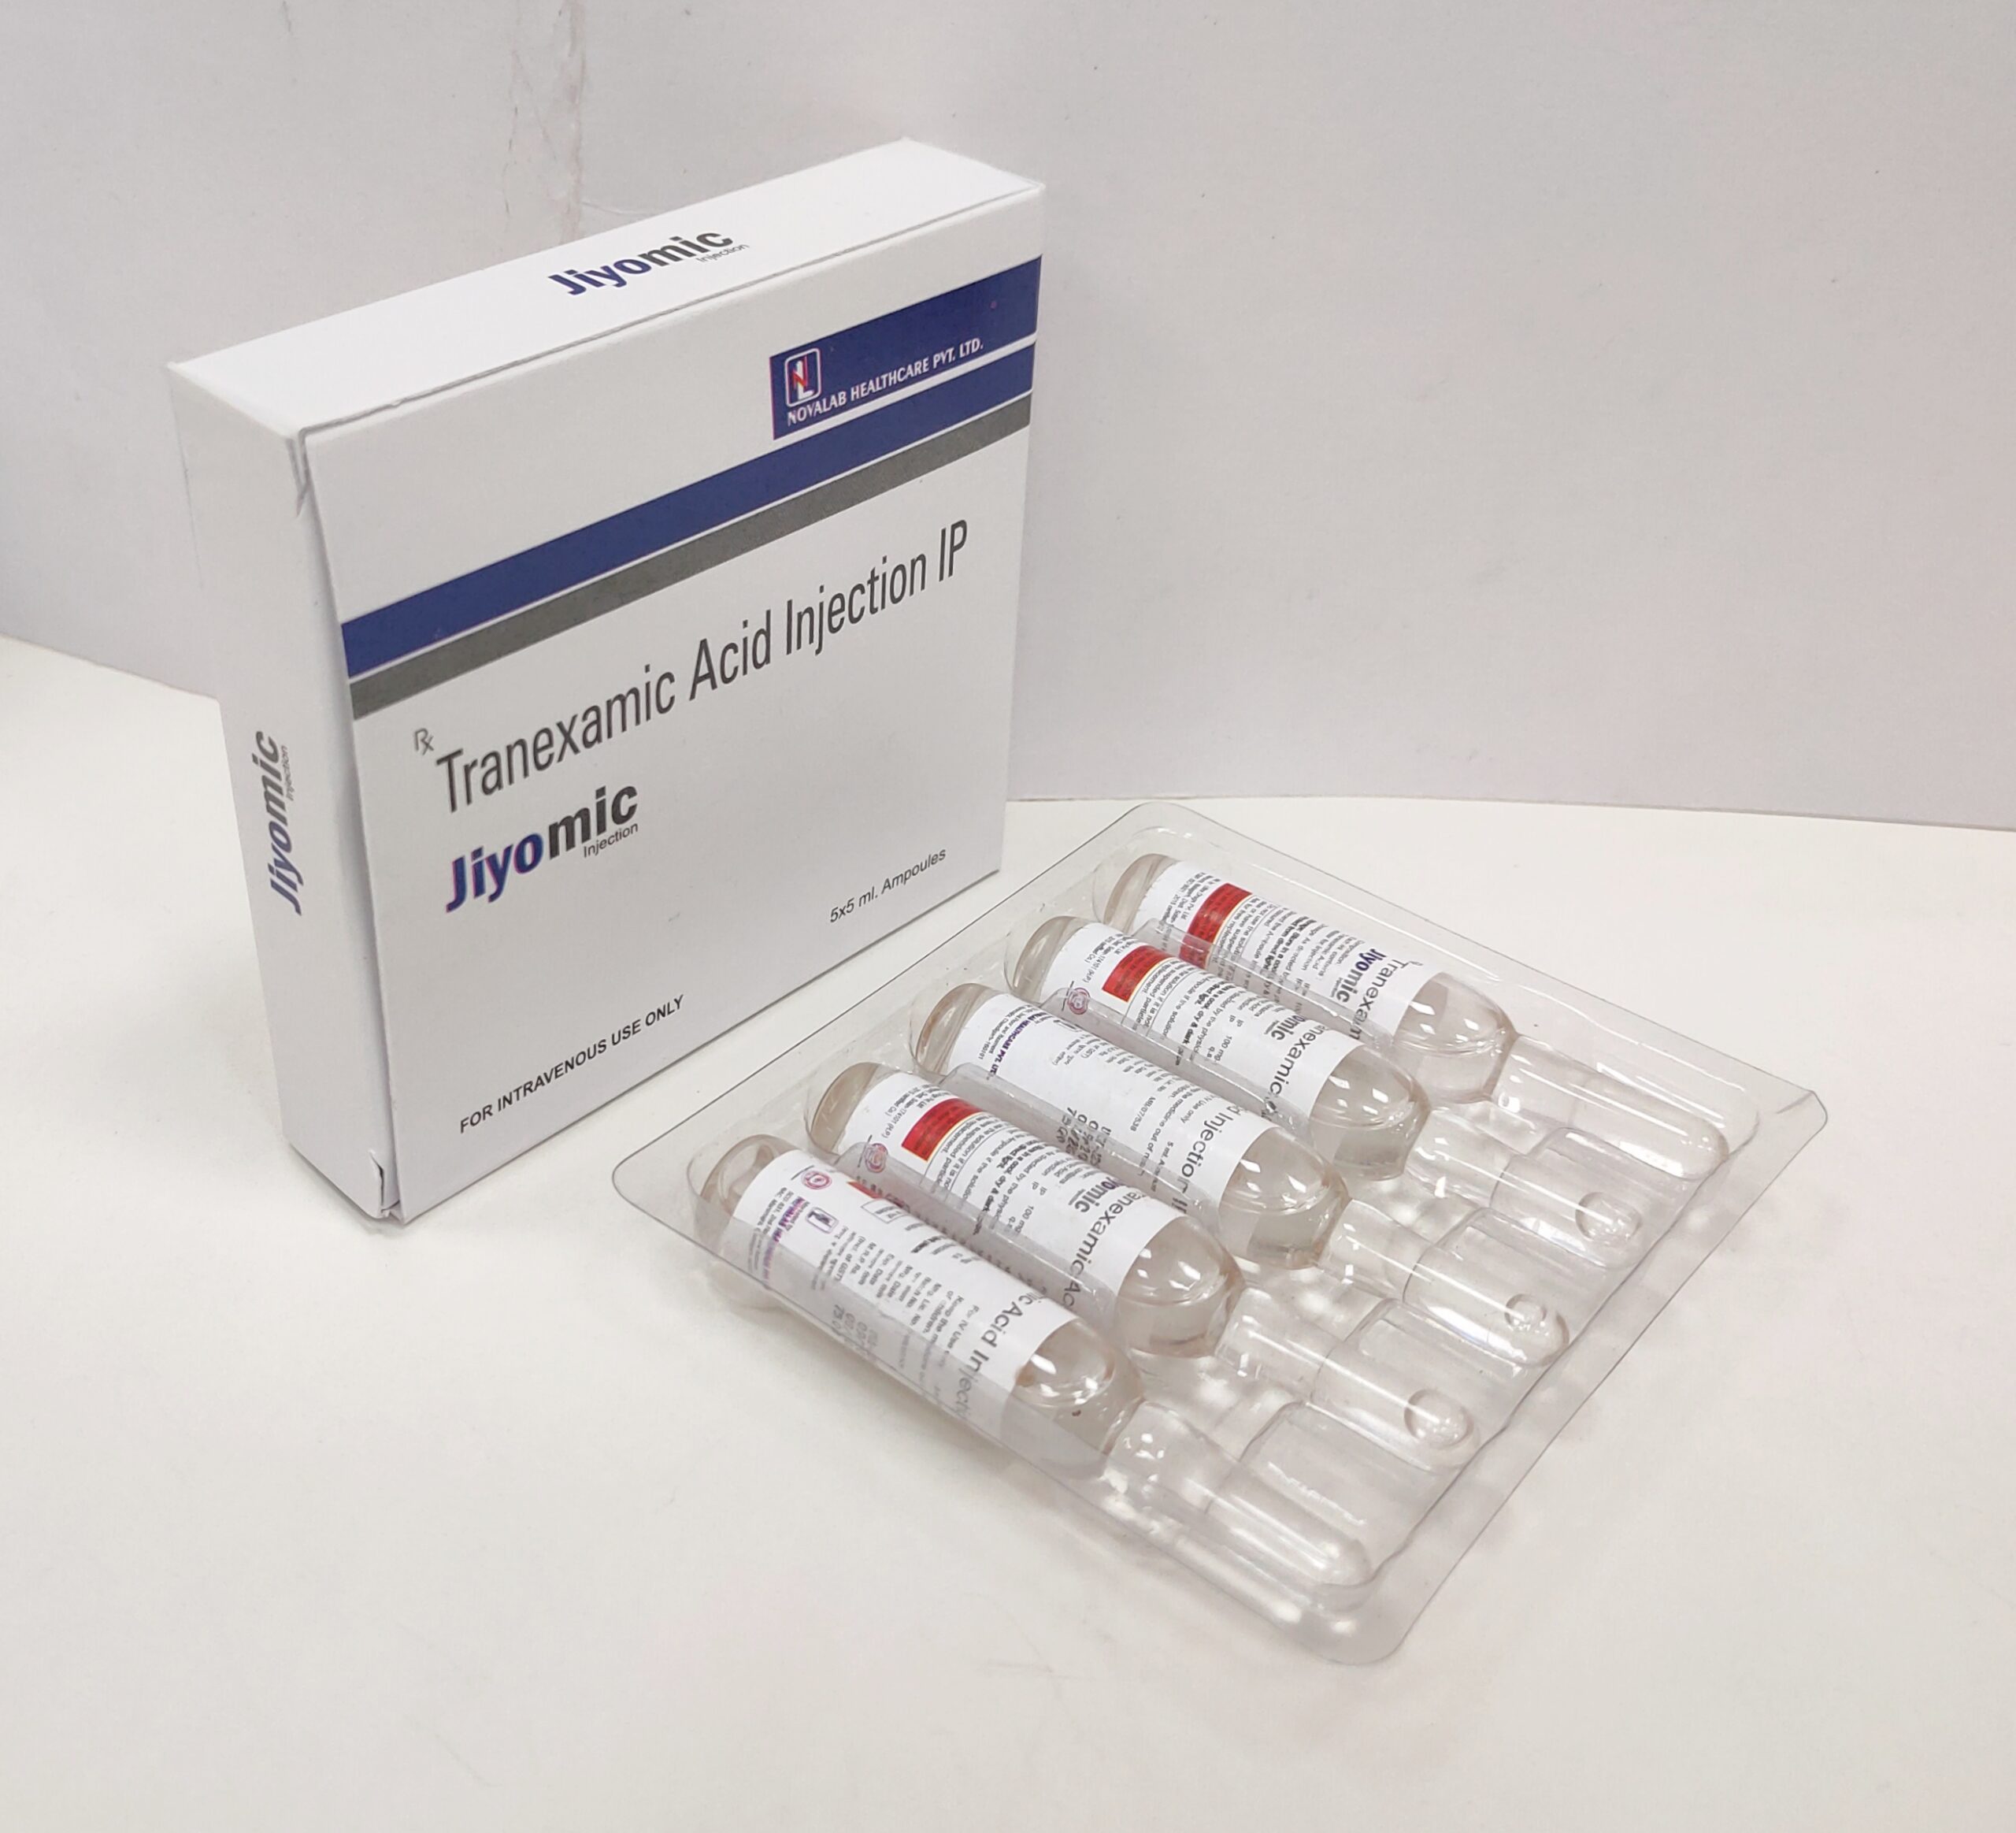 Jiyomic - Tranexamic Acid Injection